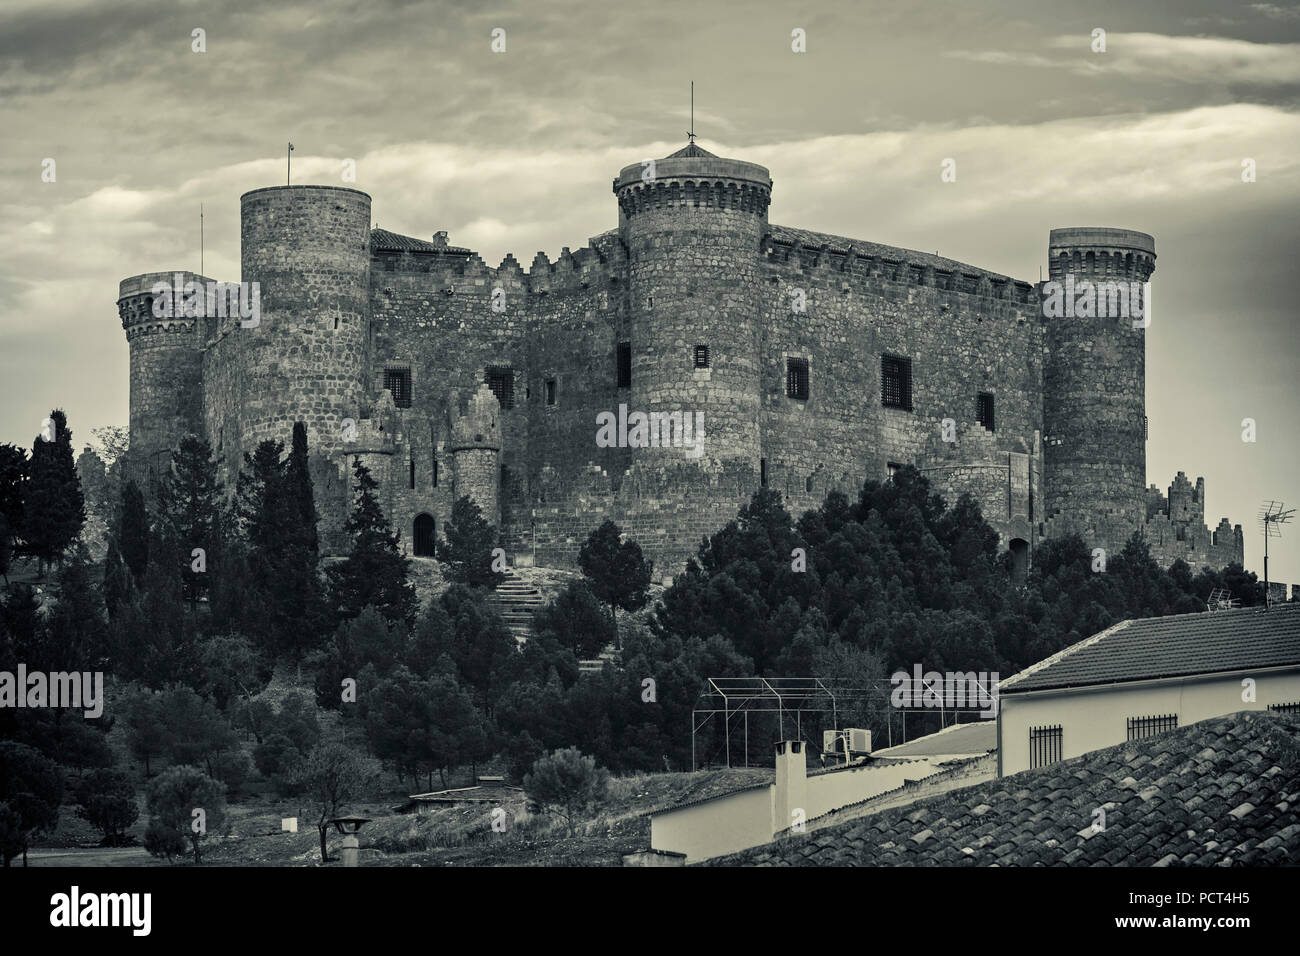 Belmonte, provincia de Cuenca, Castilla-La Mancha, Spain. Castillo gótico-mudéjar del siglo xv. Foto de stock